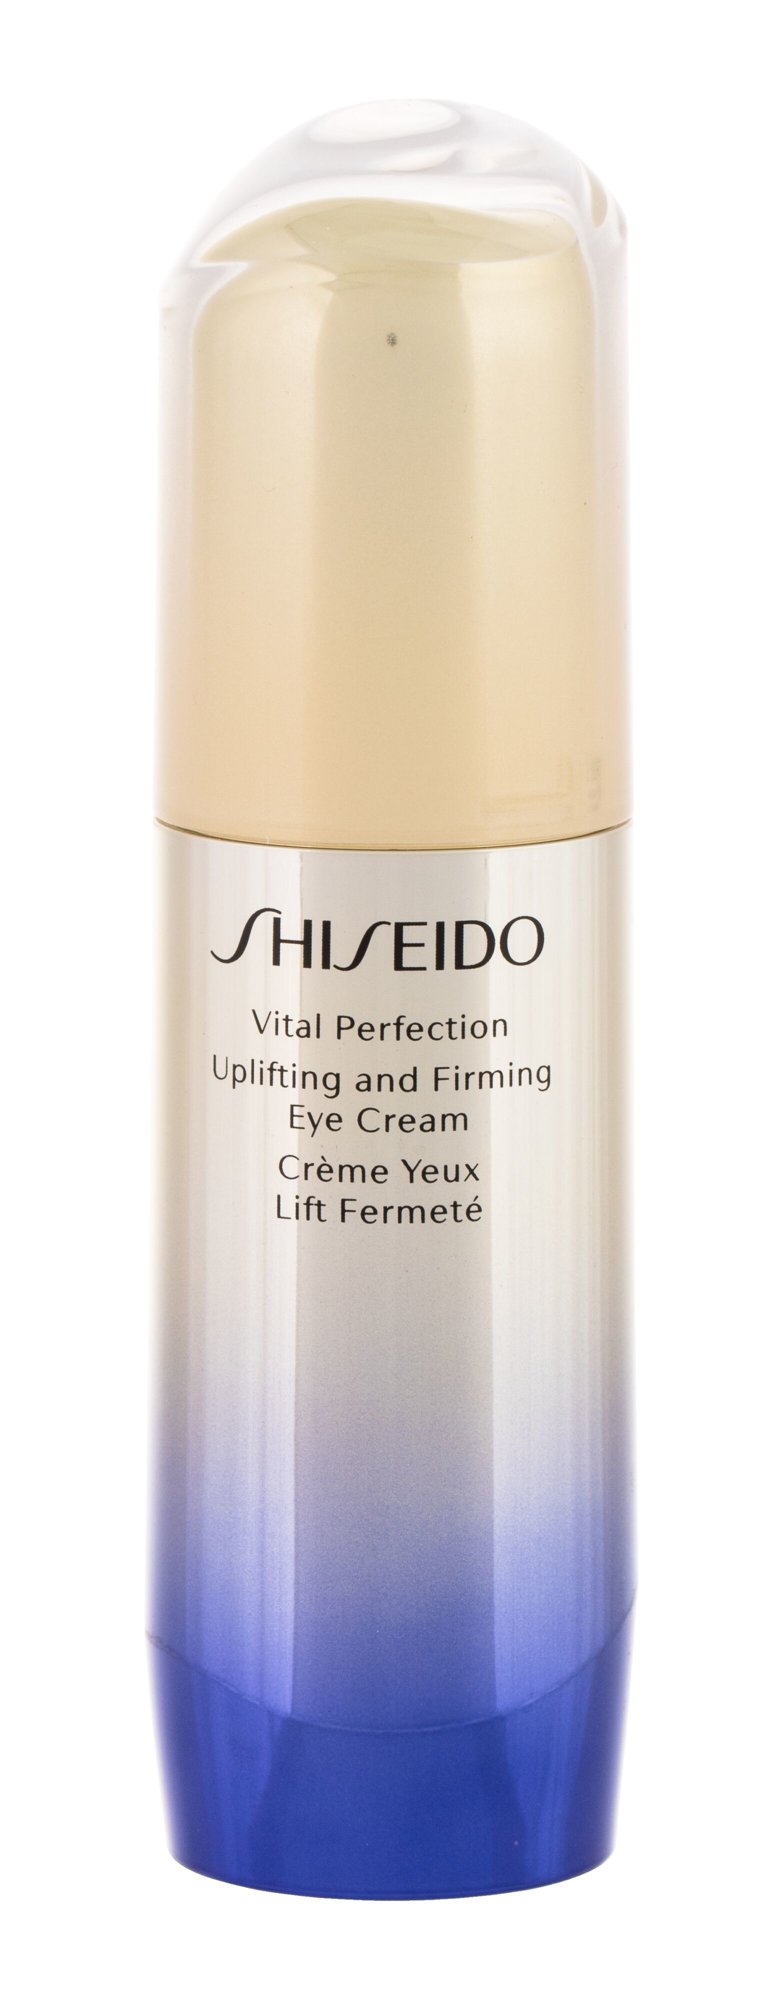 Shiseido Vital Perfection Uplifting and Firming paakių kremas